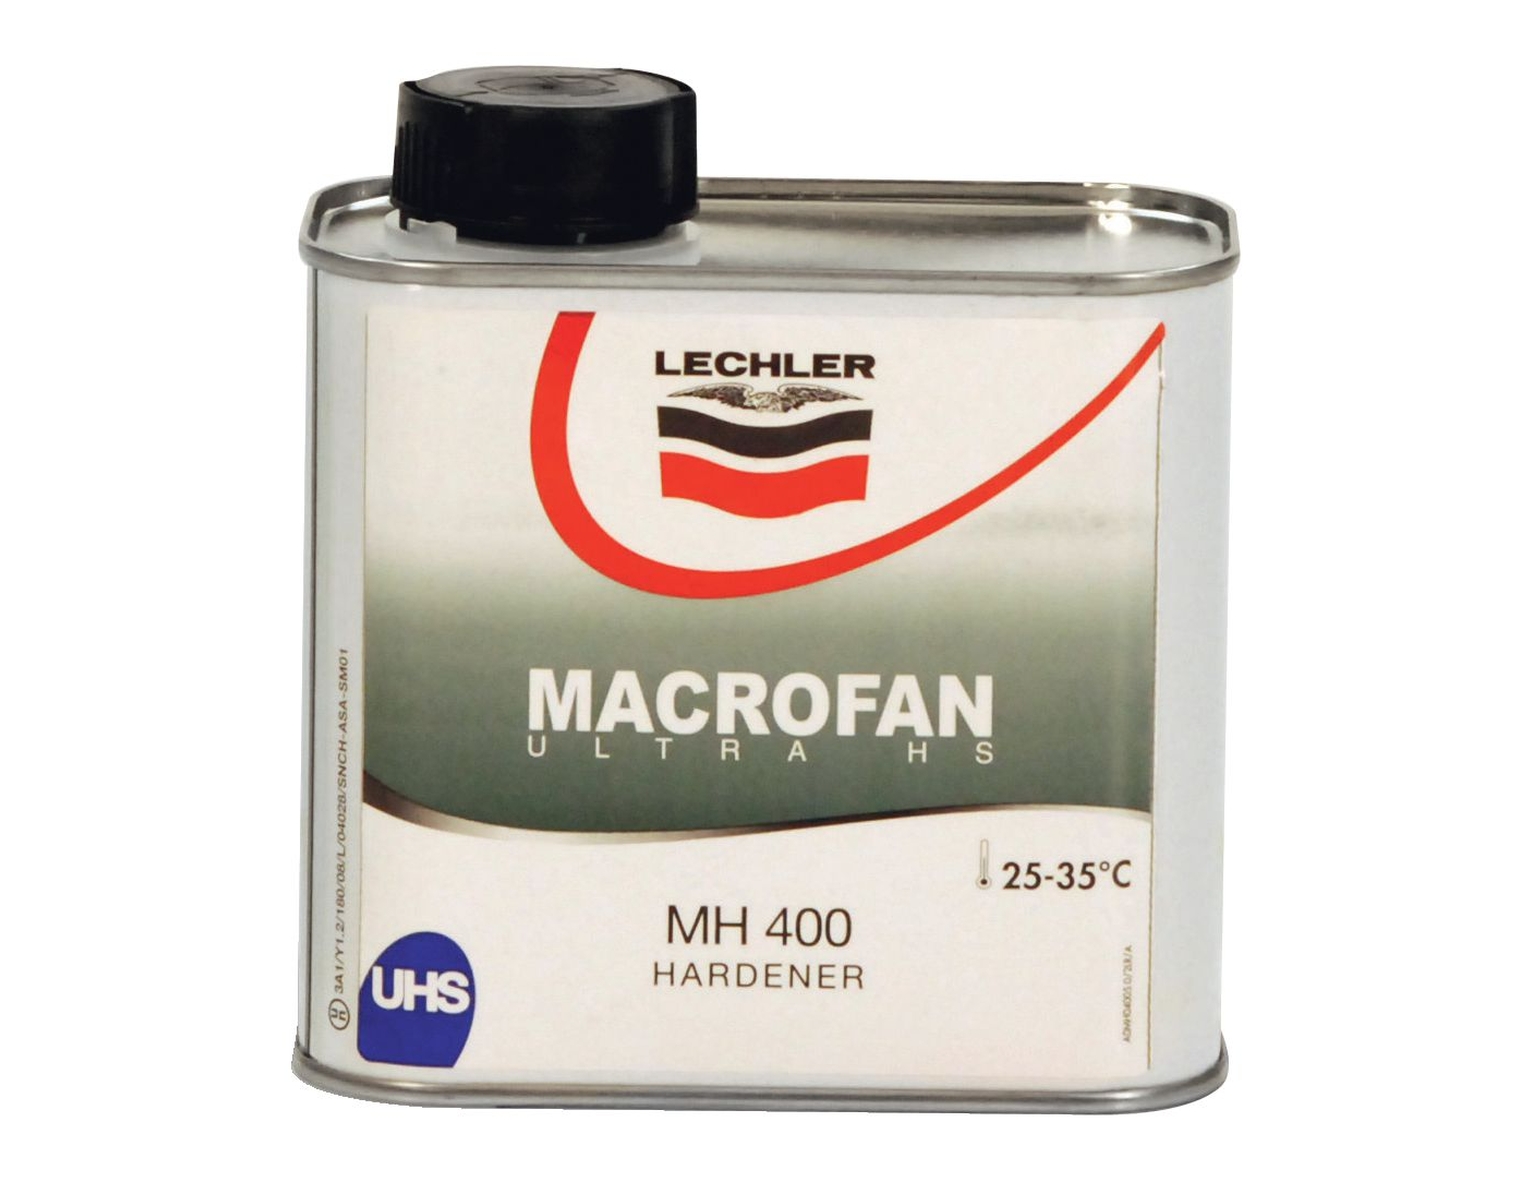 Lechler Macrofan Ultra HS Mac 4 durcisseur, MH400, 0.5 litre